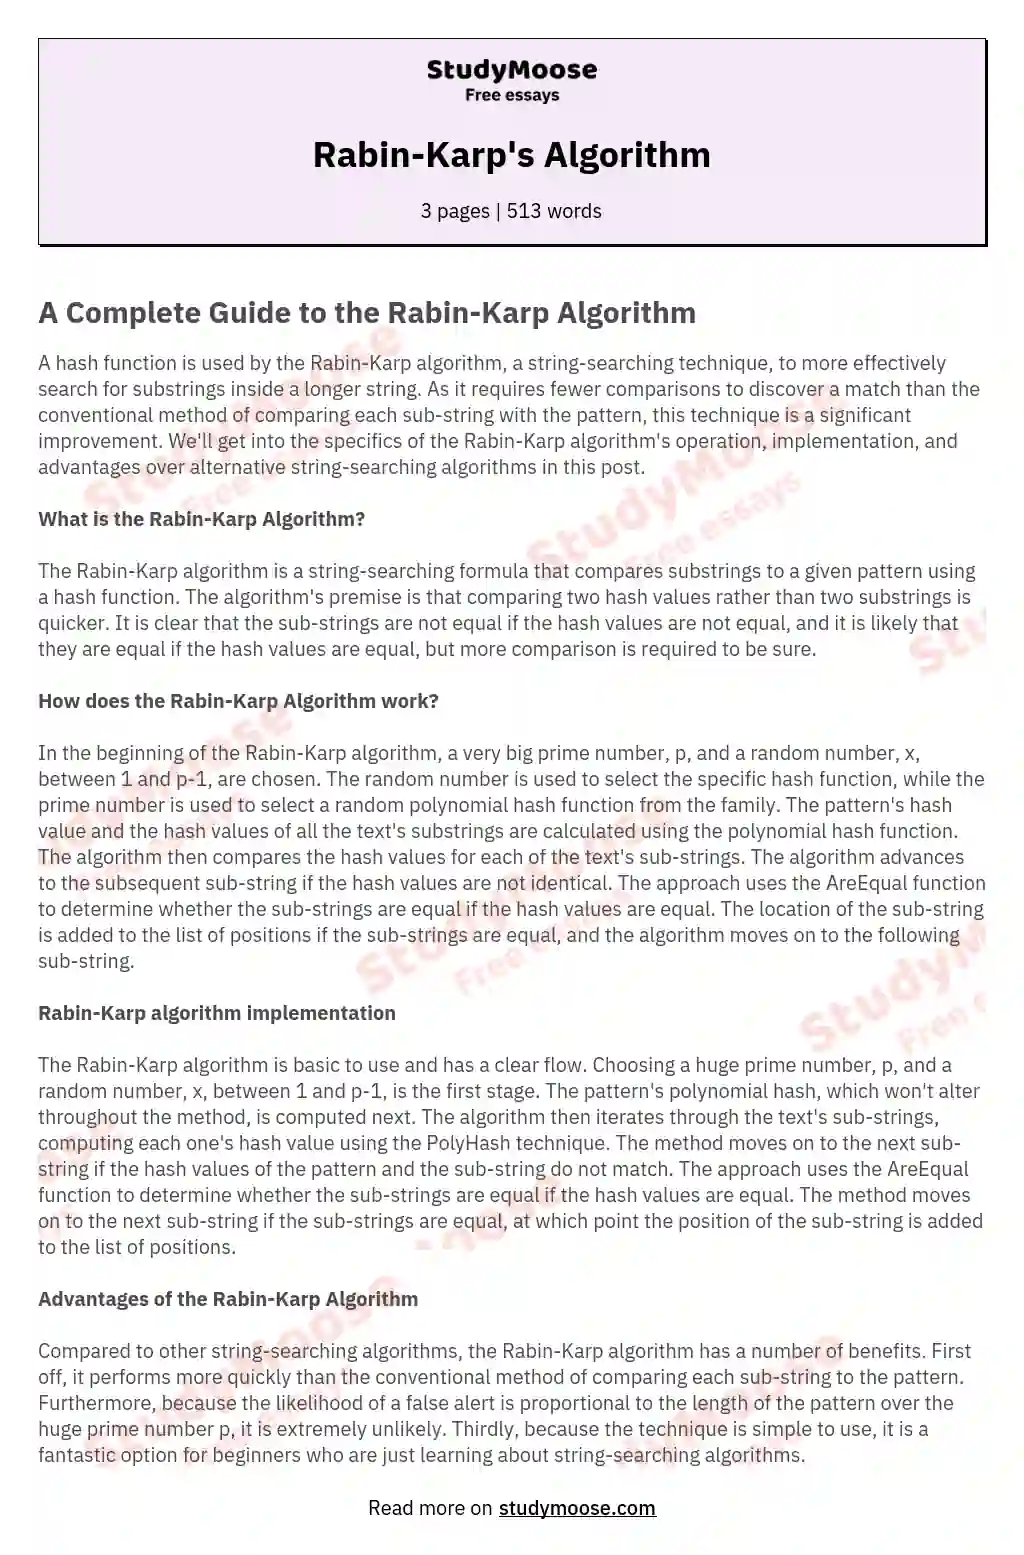 Rabin-Karp's Algorithm essay